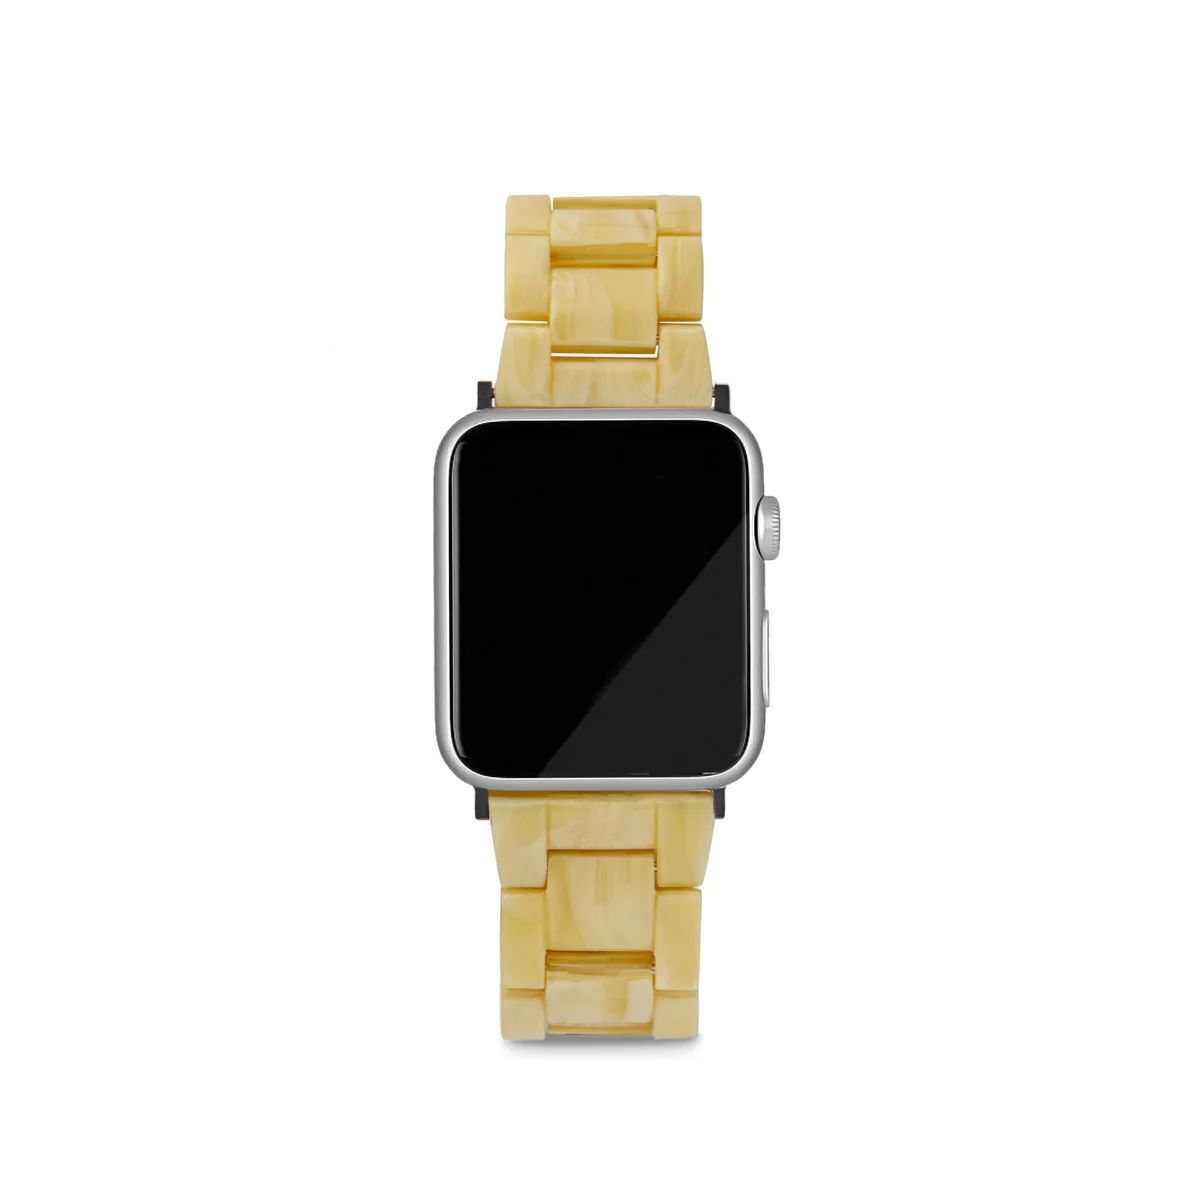 Apple Watch Band in Naples Yellow | Machete